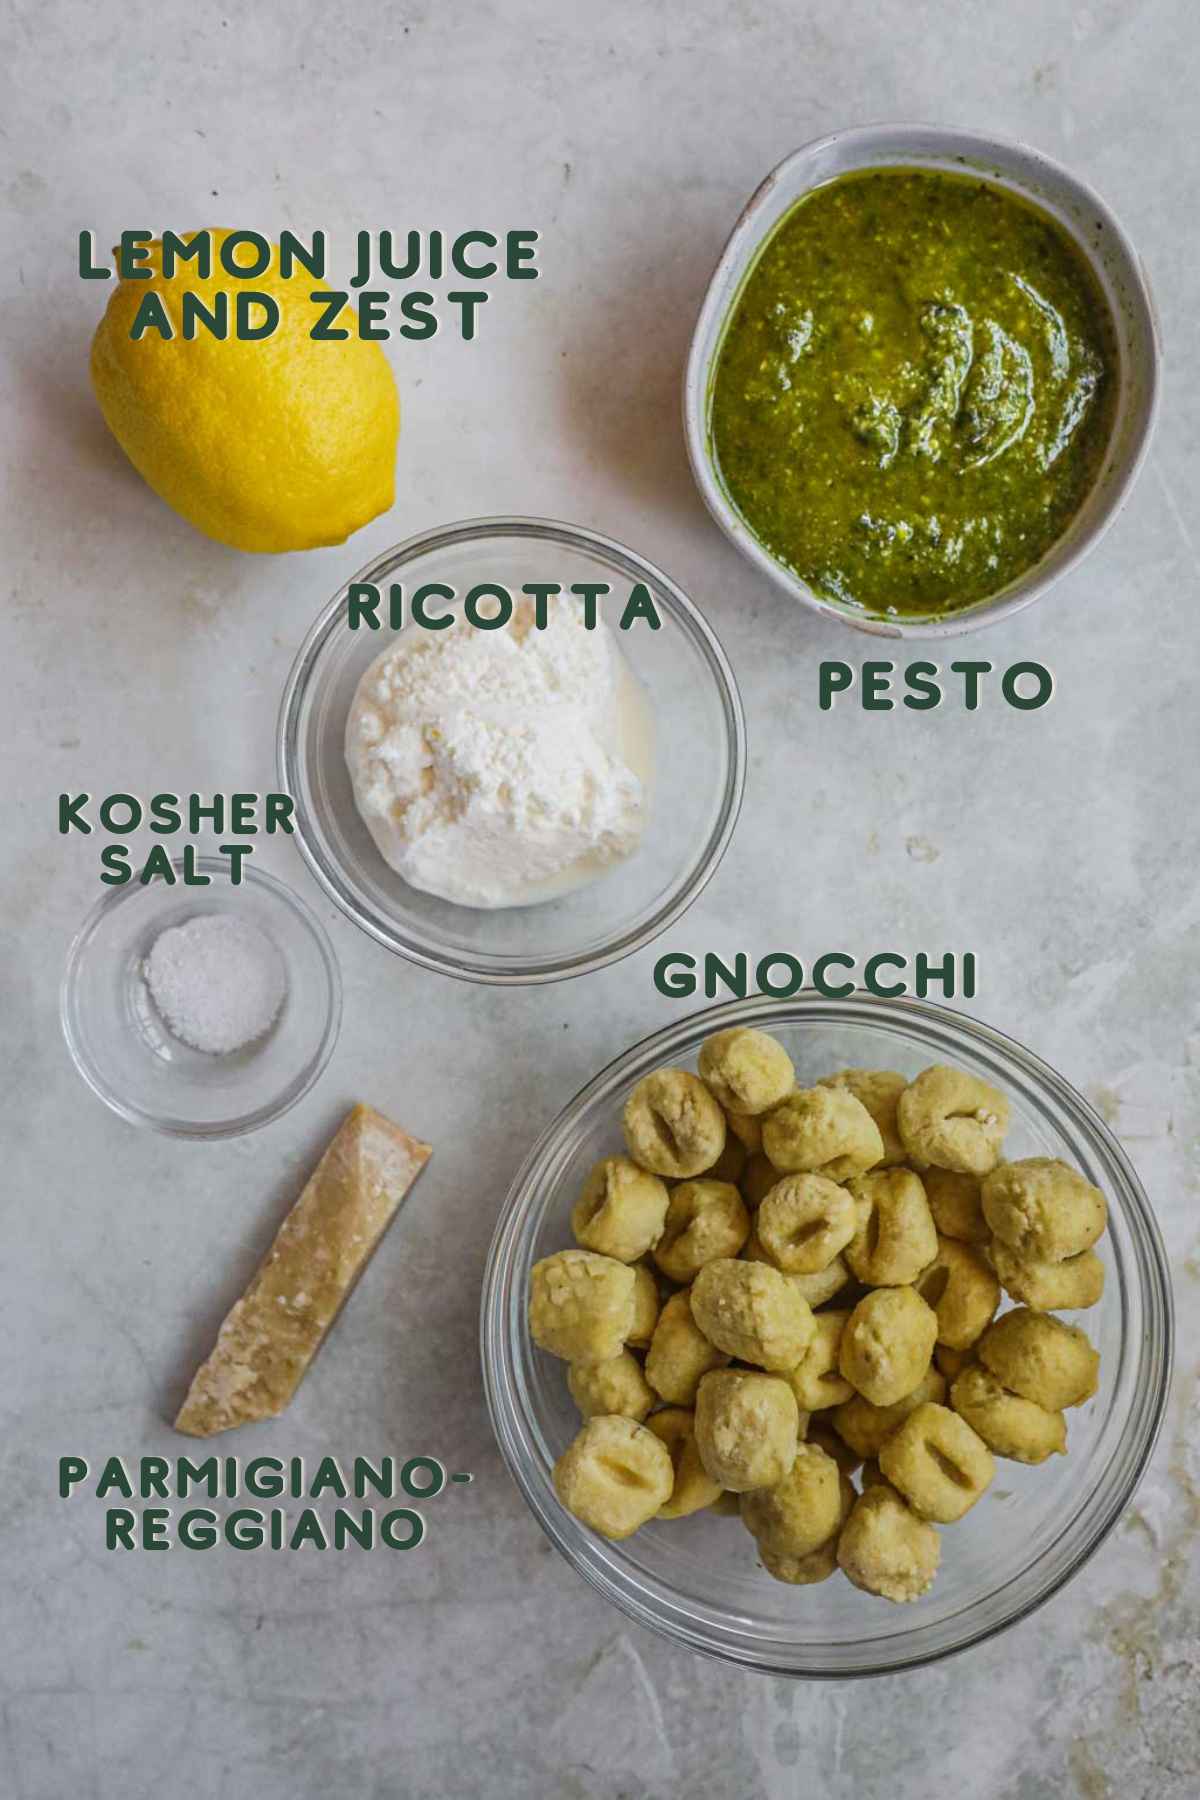 Ingredients to make gnocchi al pesto (creamy pesto gnocchi), gnocchi, pesto, ricotta, kosher salt, parmigiano-reggiano, lemon juice and zest.